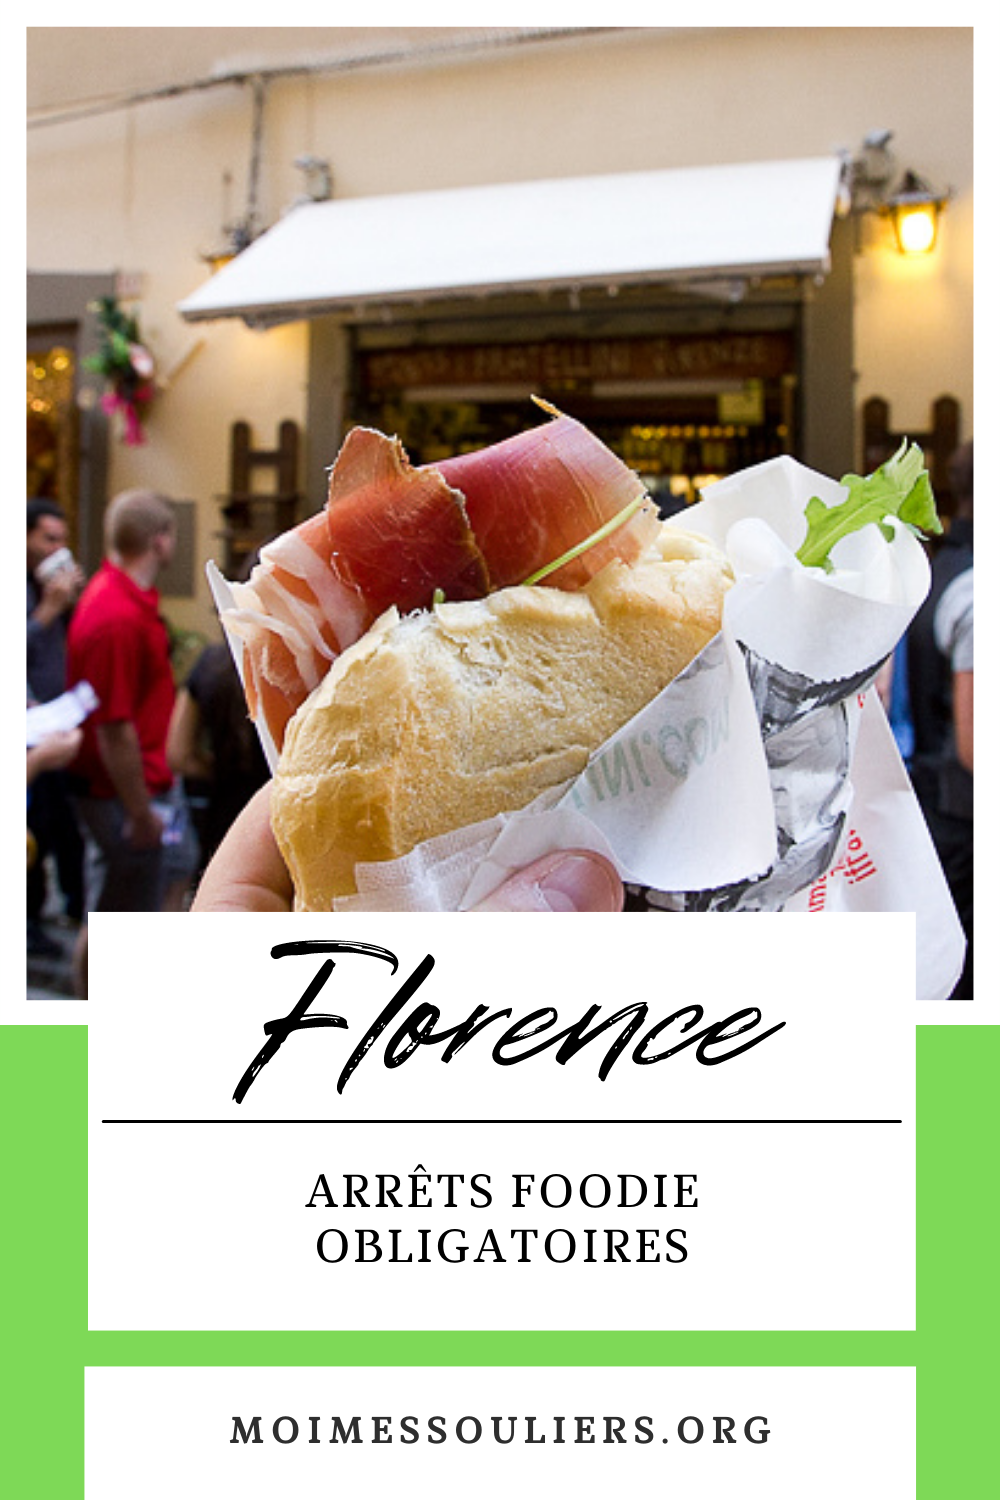 Arrêts foodie obligatoires en Florence